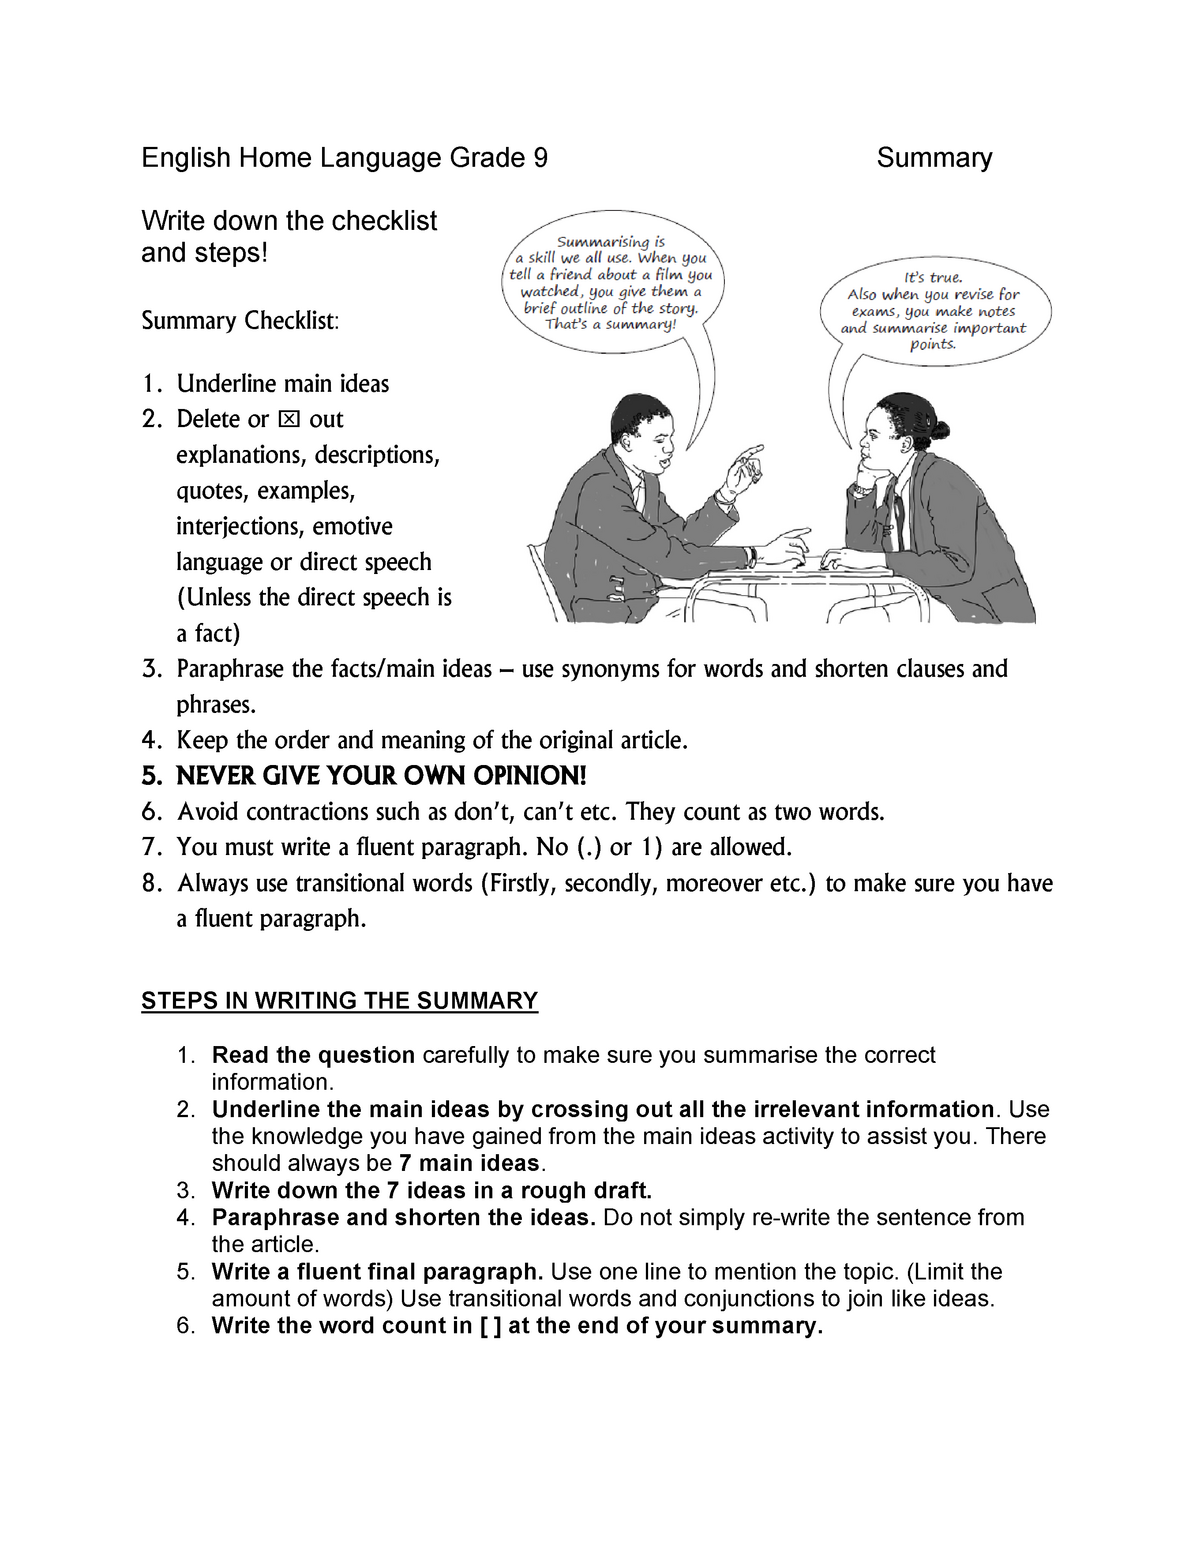 grade 9 english hl summary worksheet english home language grade 9 summary write down the studocu